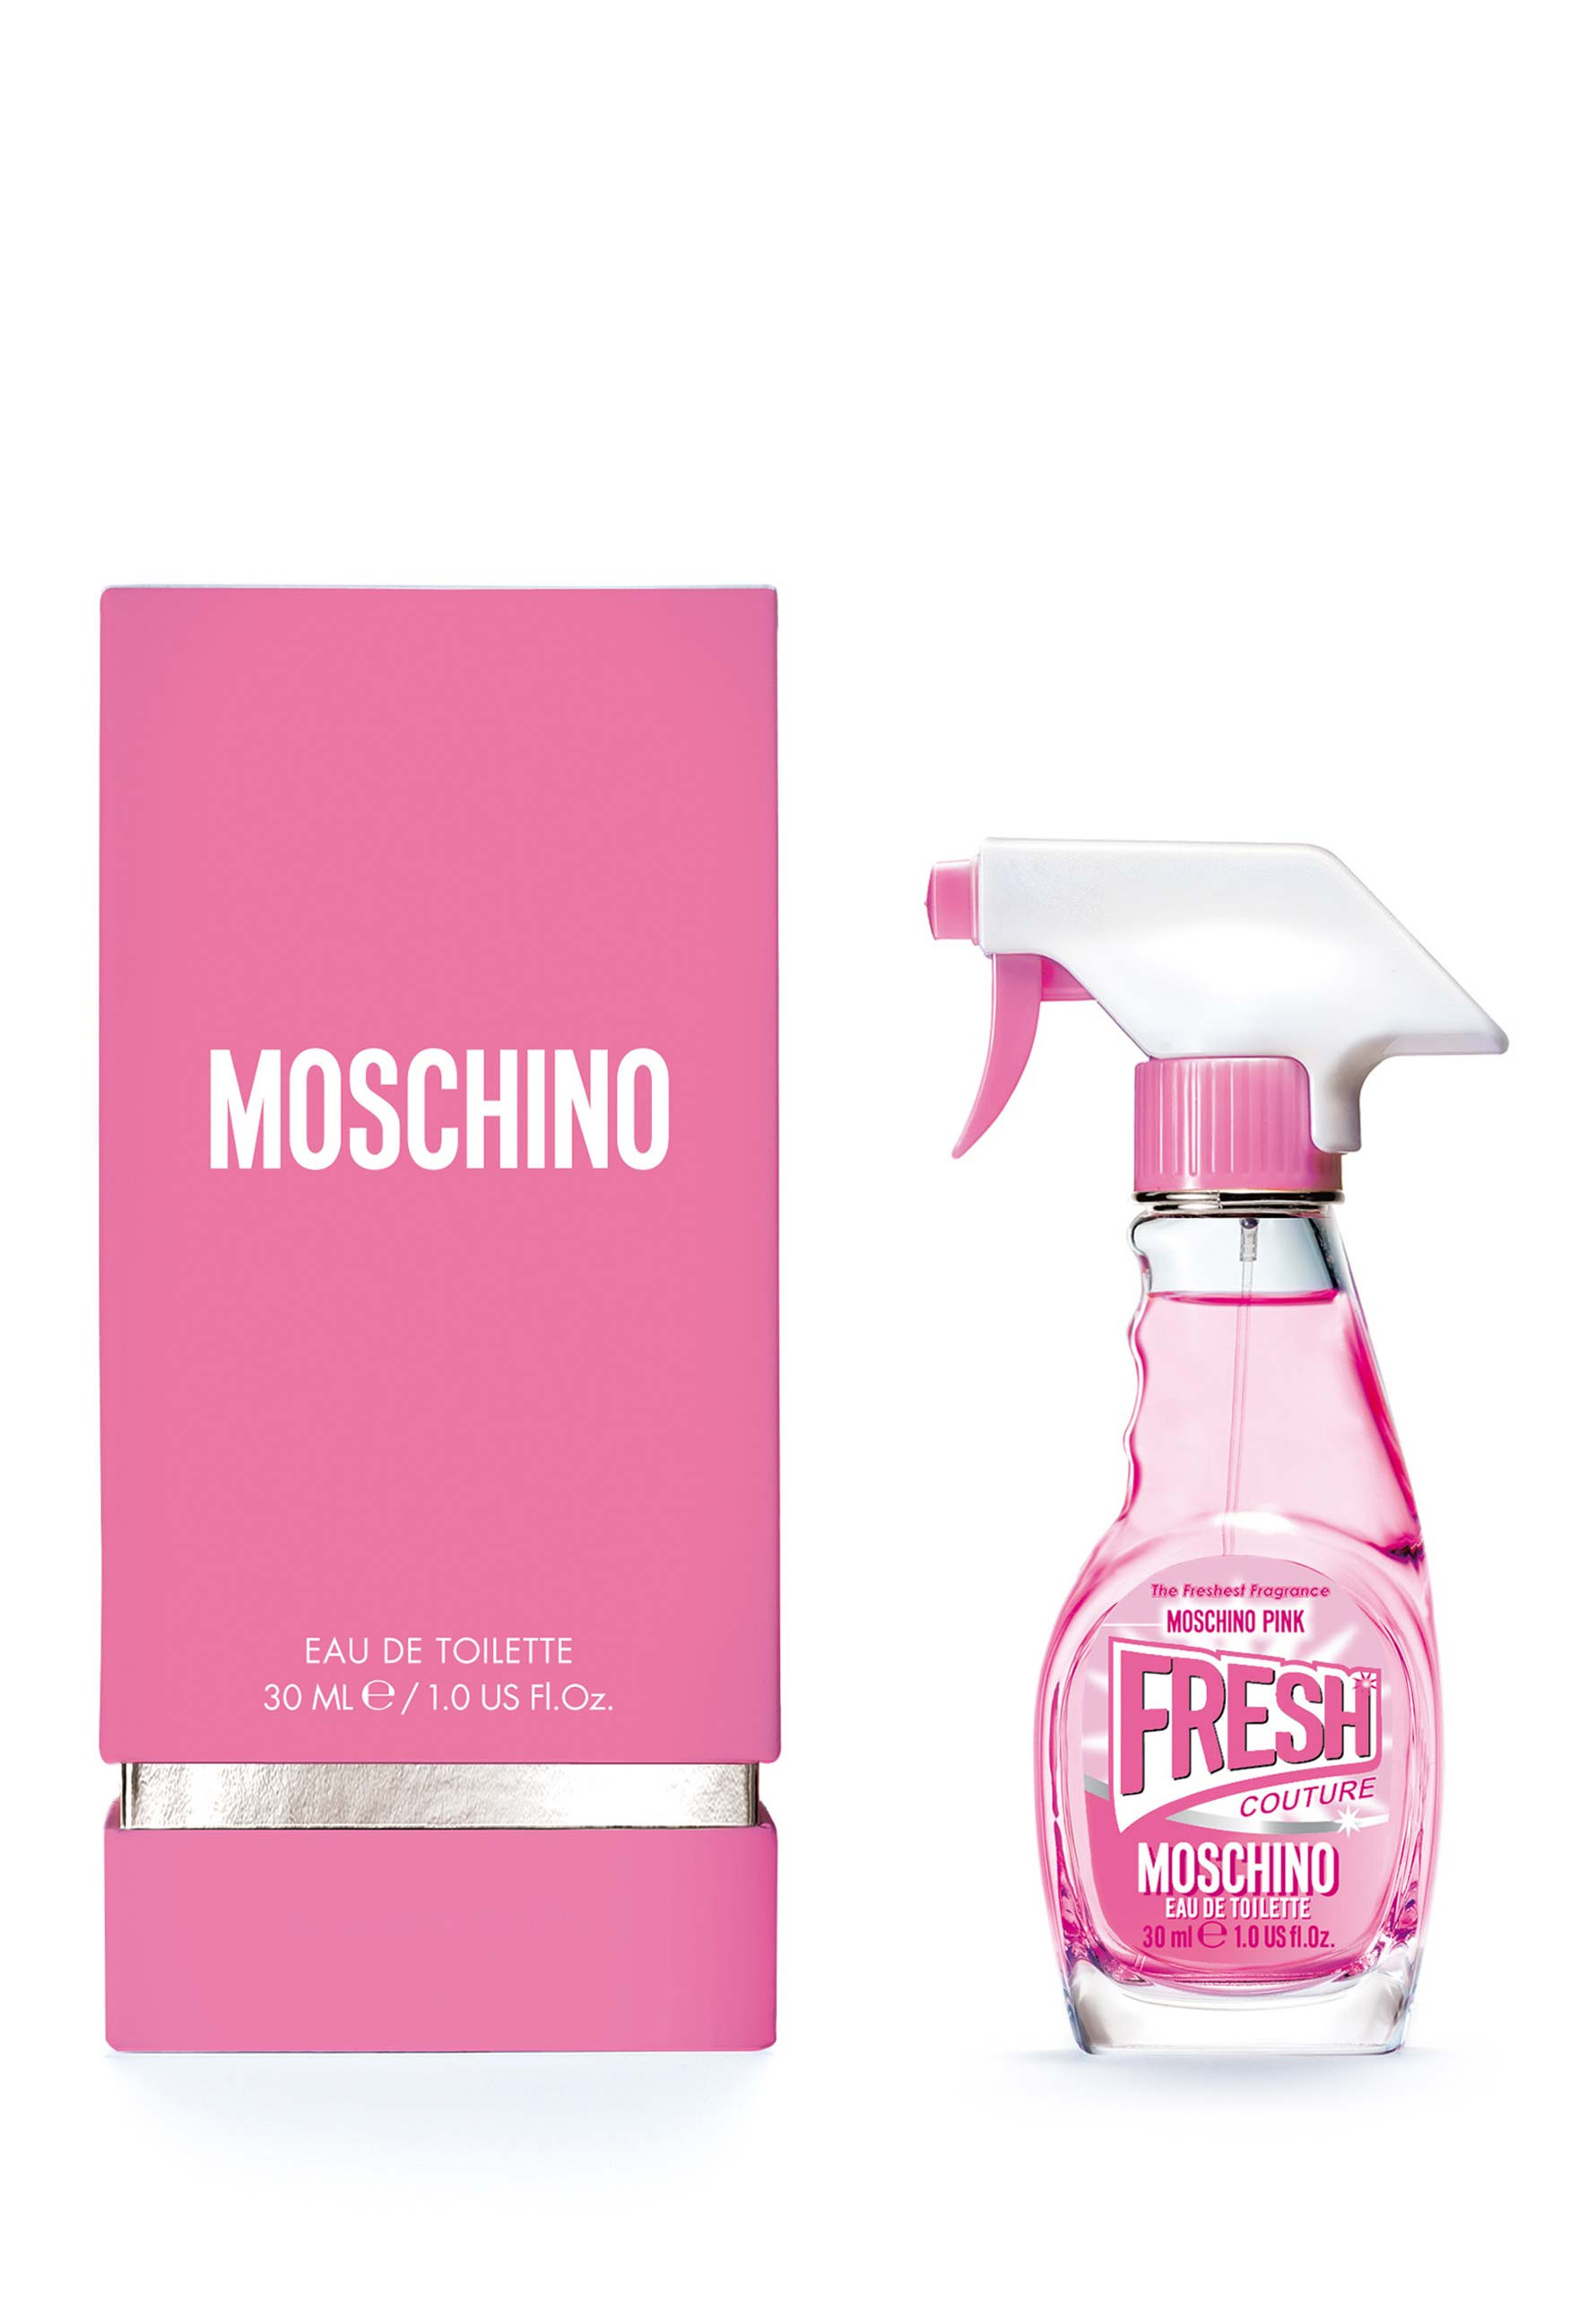 20181004-moschino-pink-fresh-couture-02